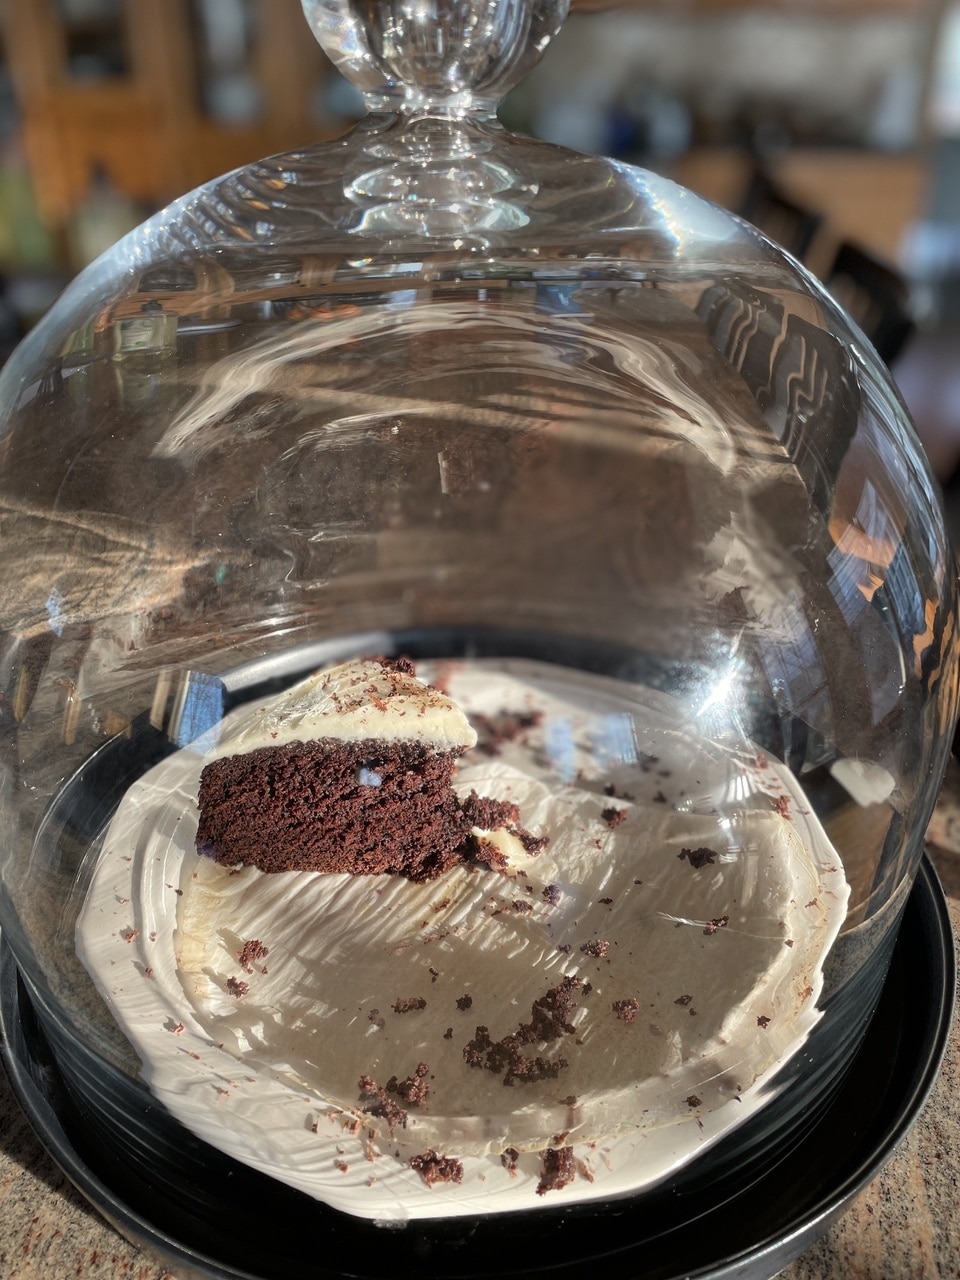 Irish stout cake under glass